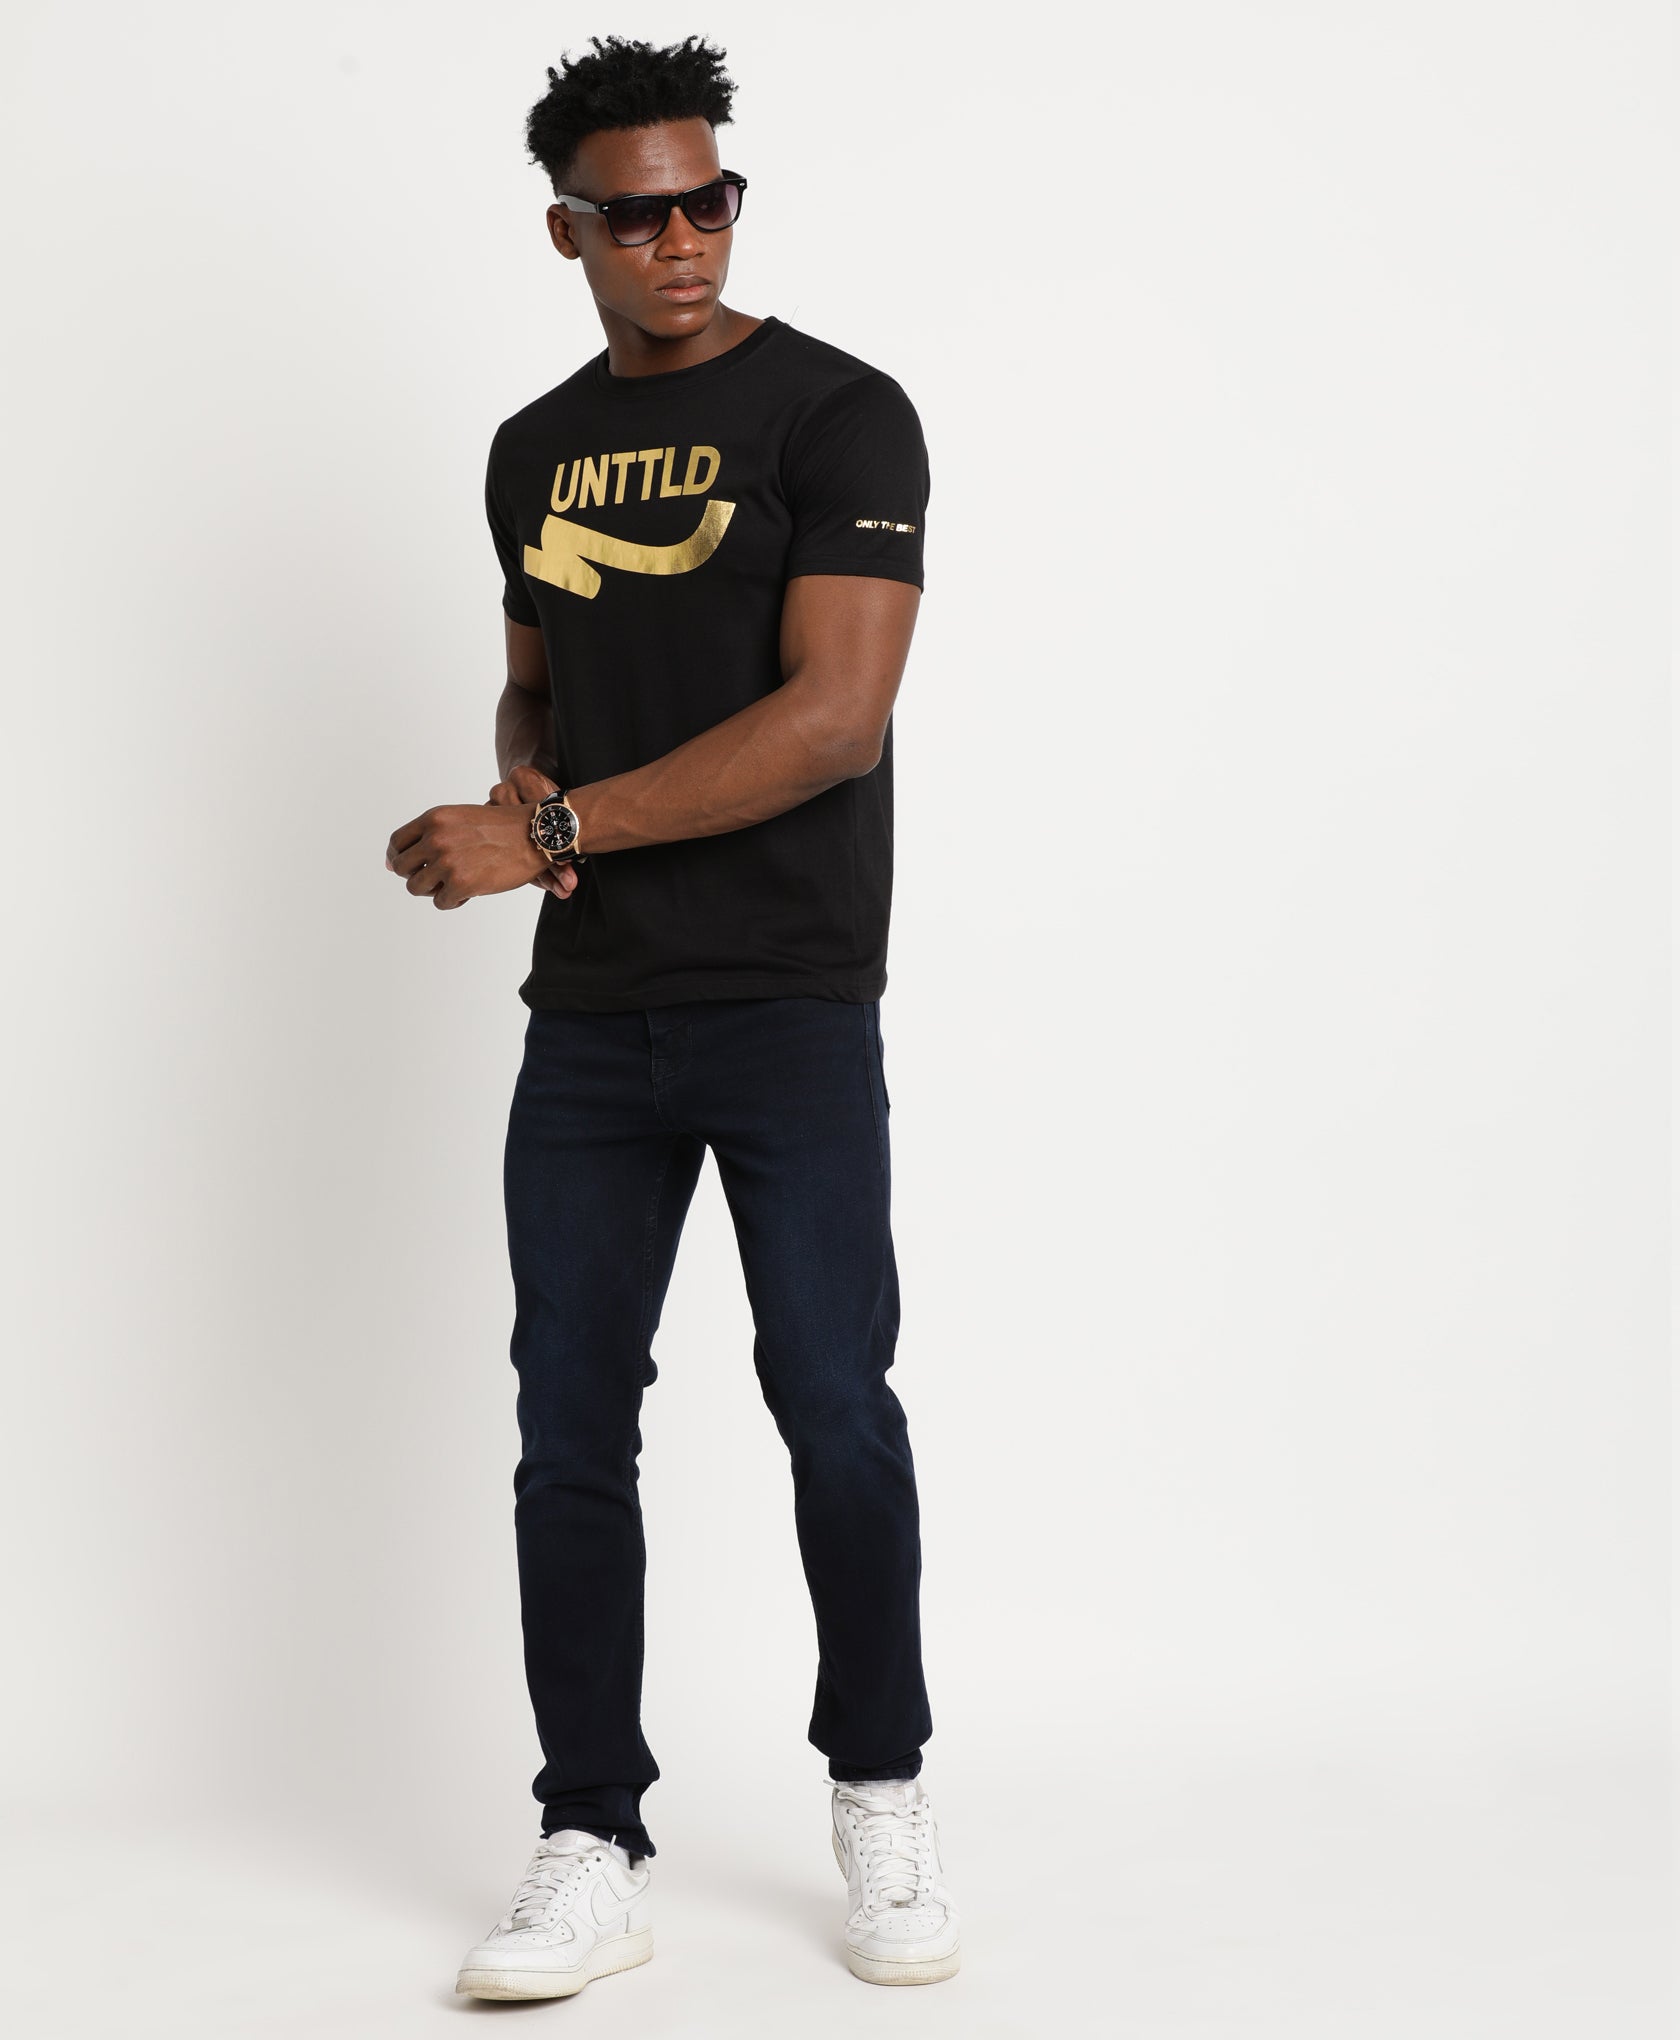 Black Slim-fit T-Shirt for Men